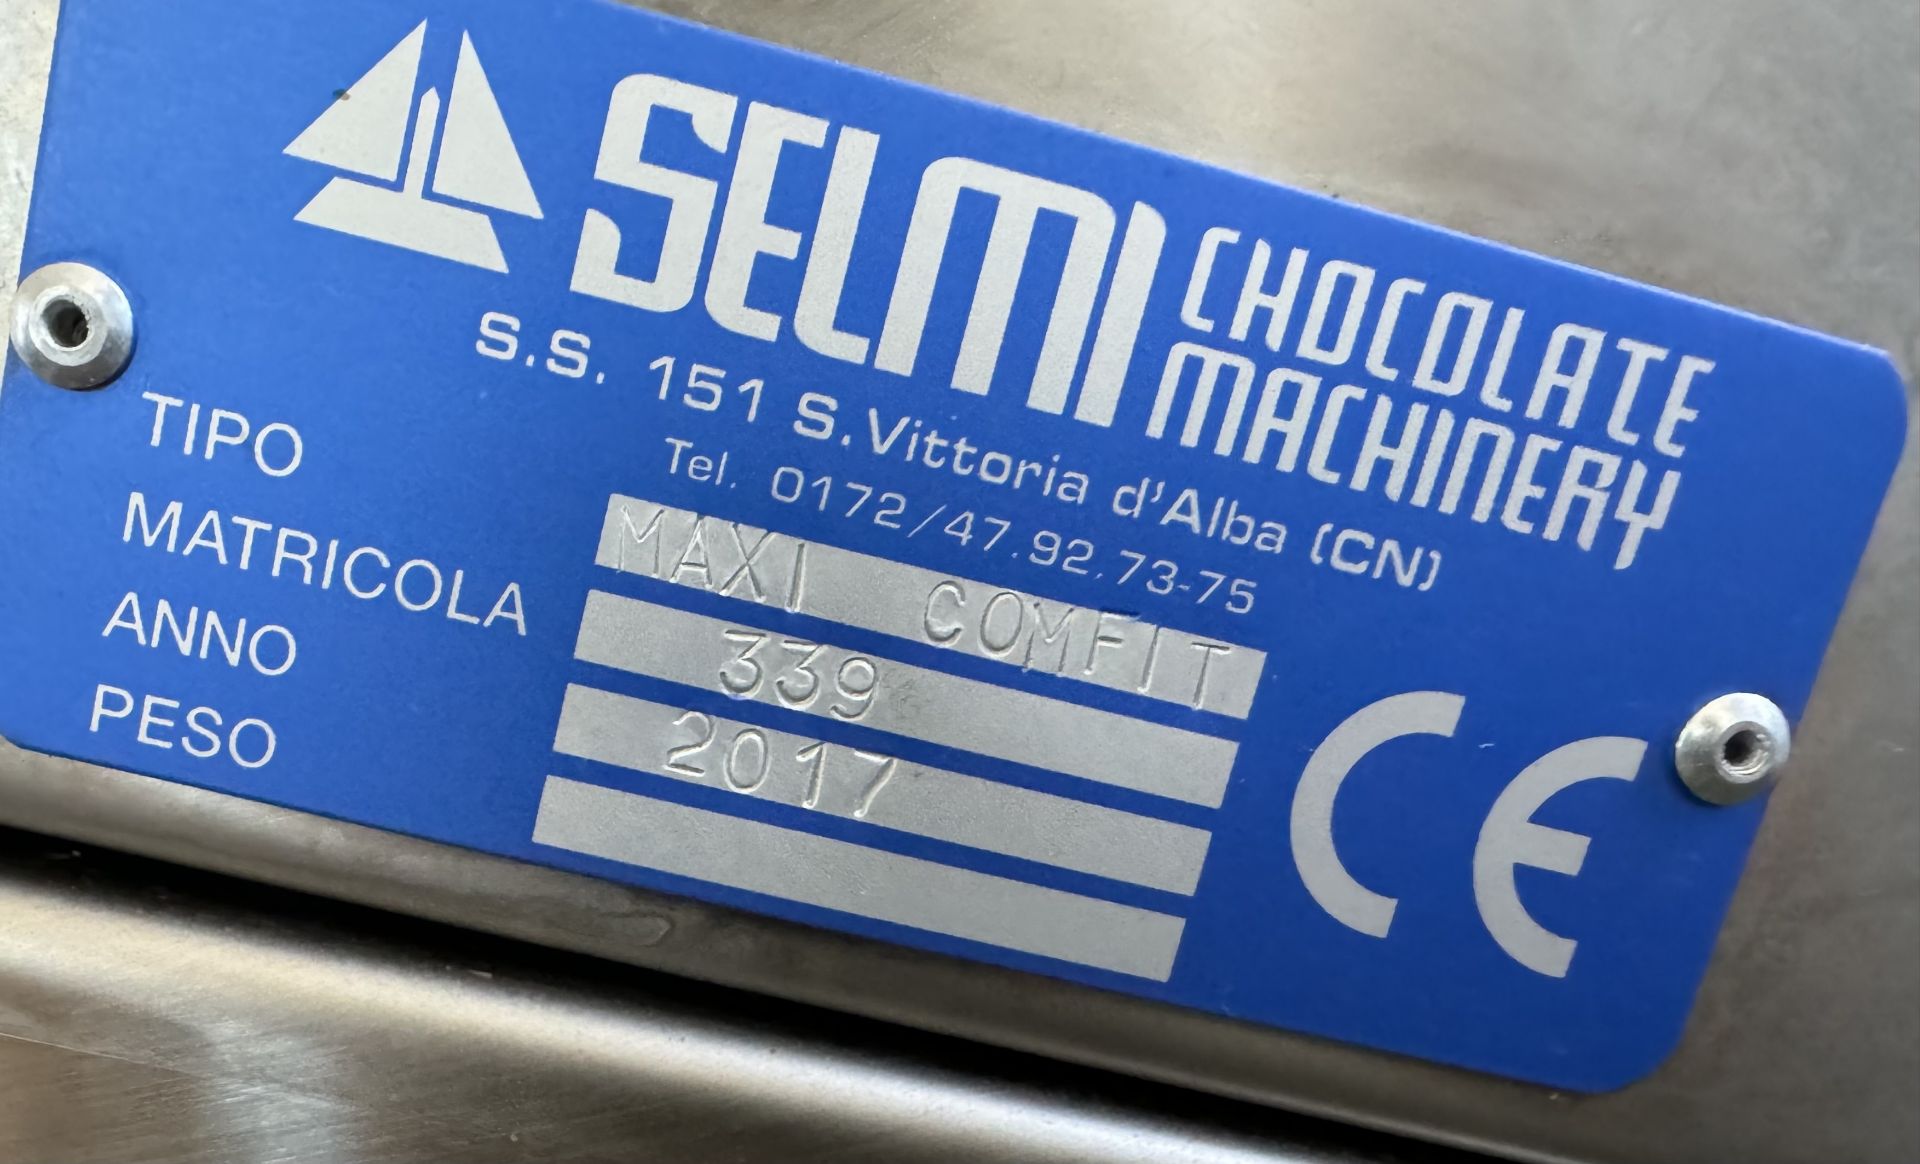 Used Comfit Maxi Chocolate Coating Panning Machine. Model Maxi Comfit. - Image 3 of 6